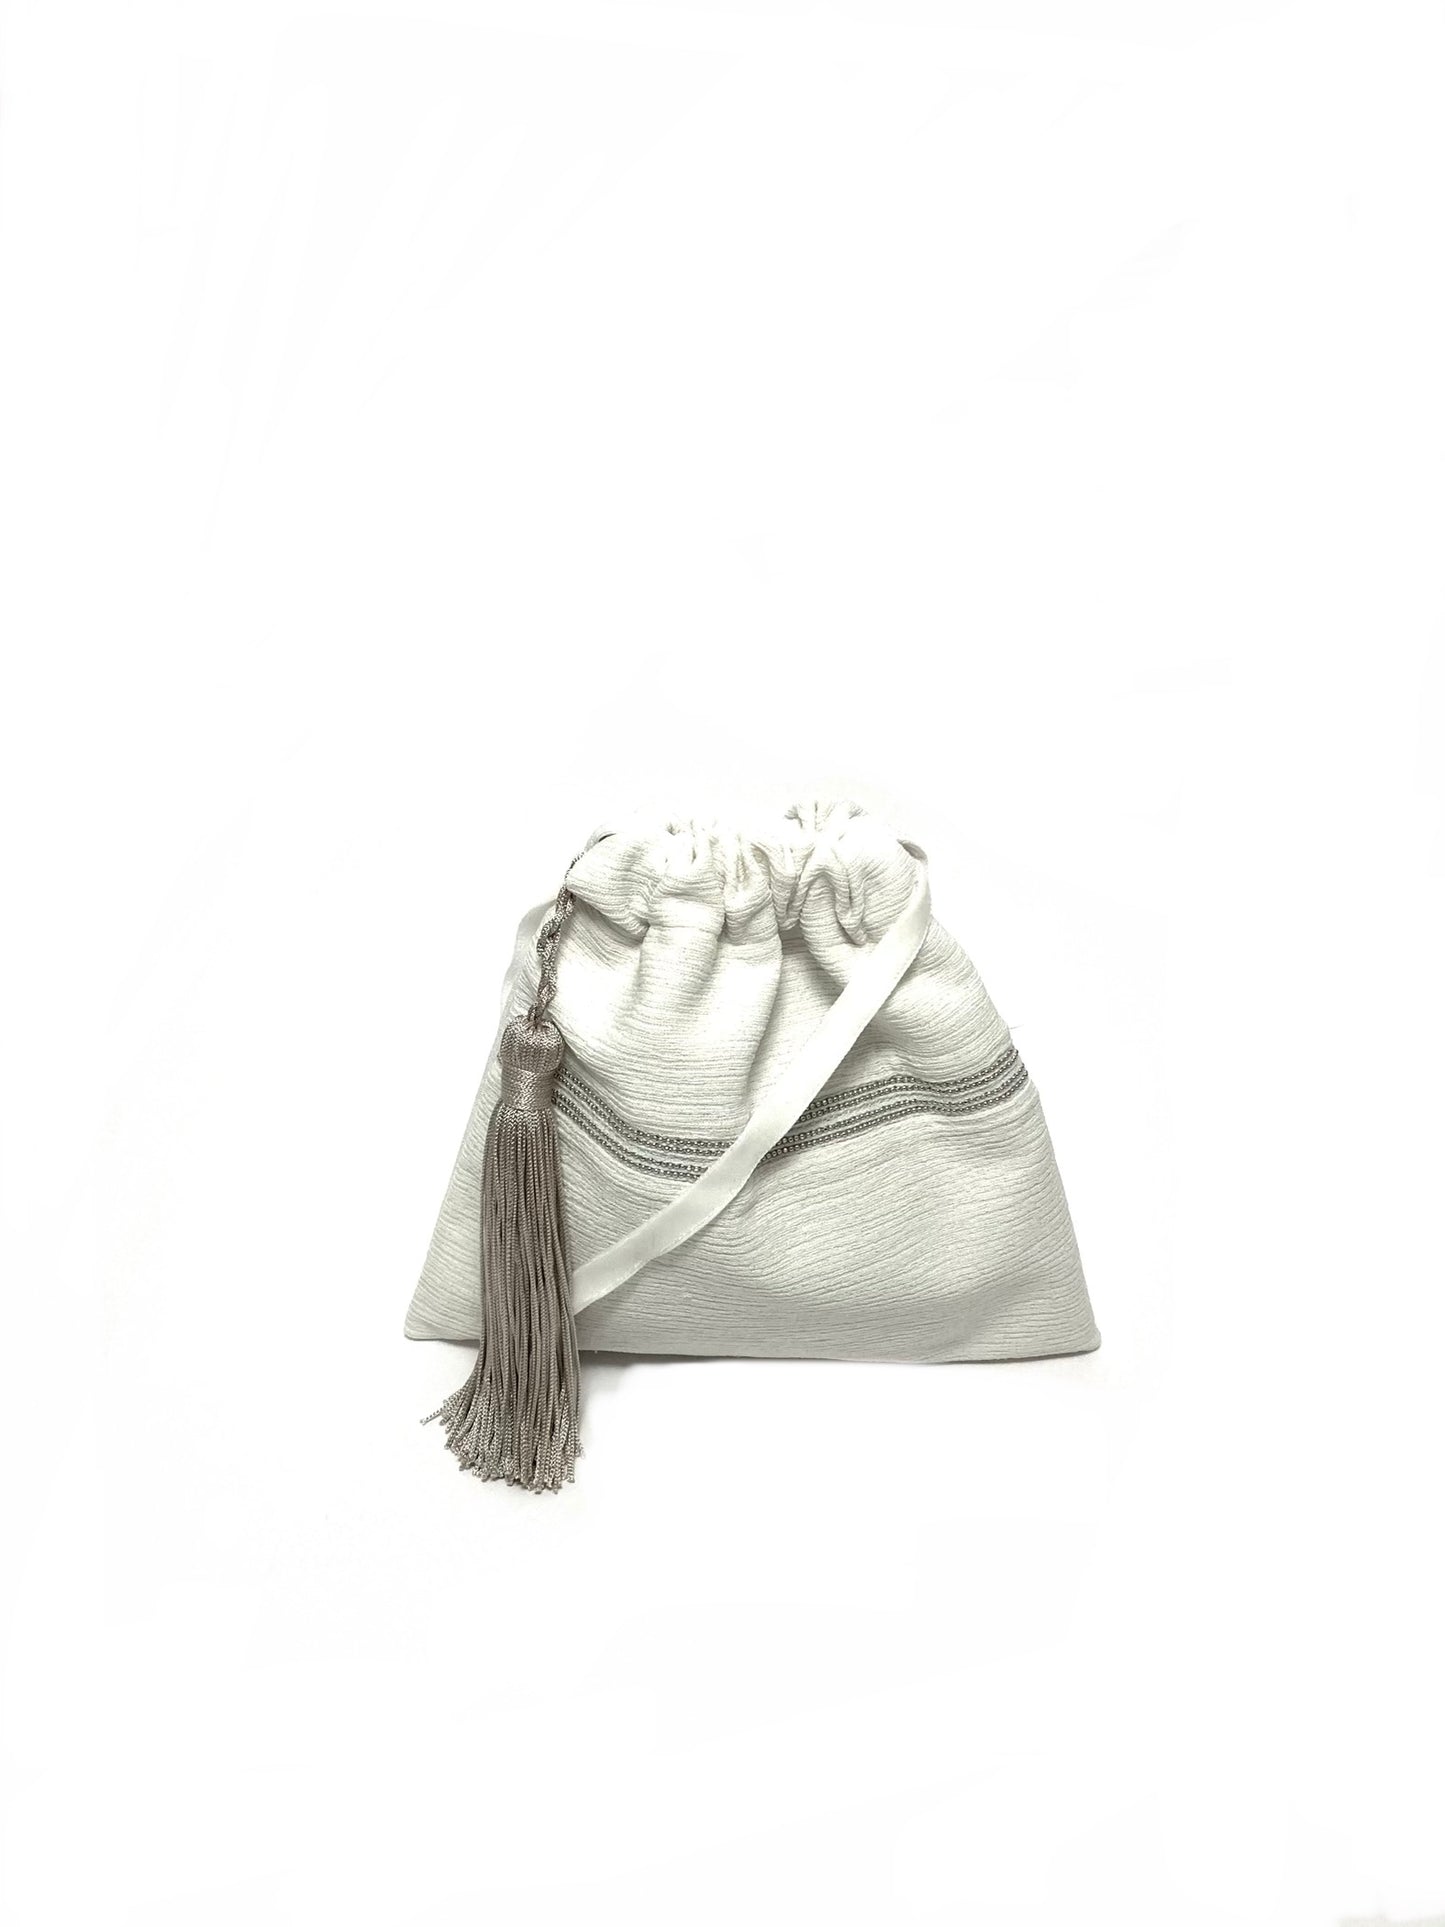 White wedding purse